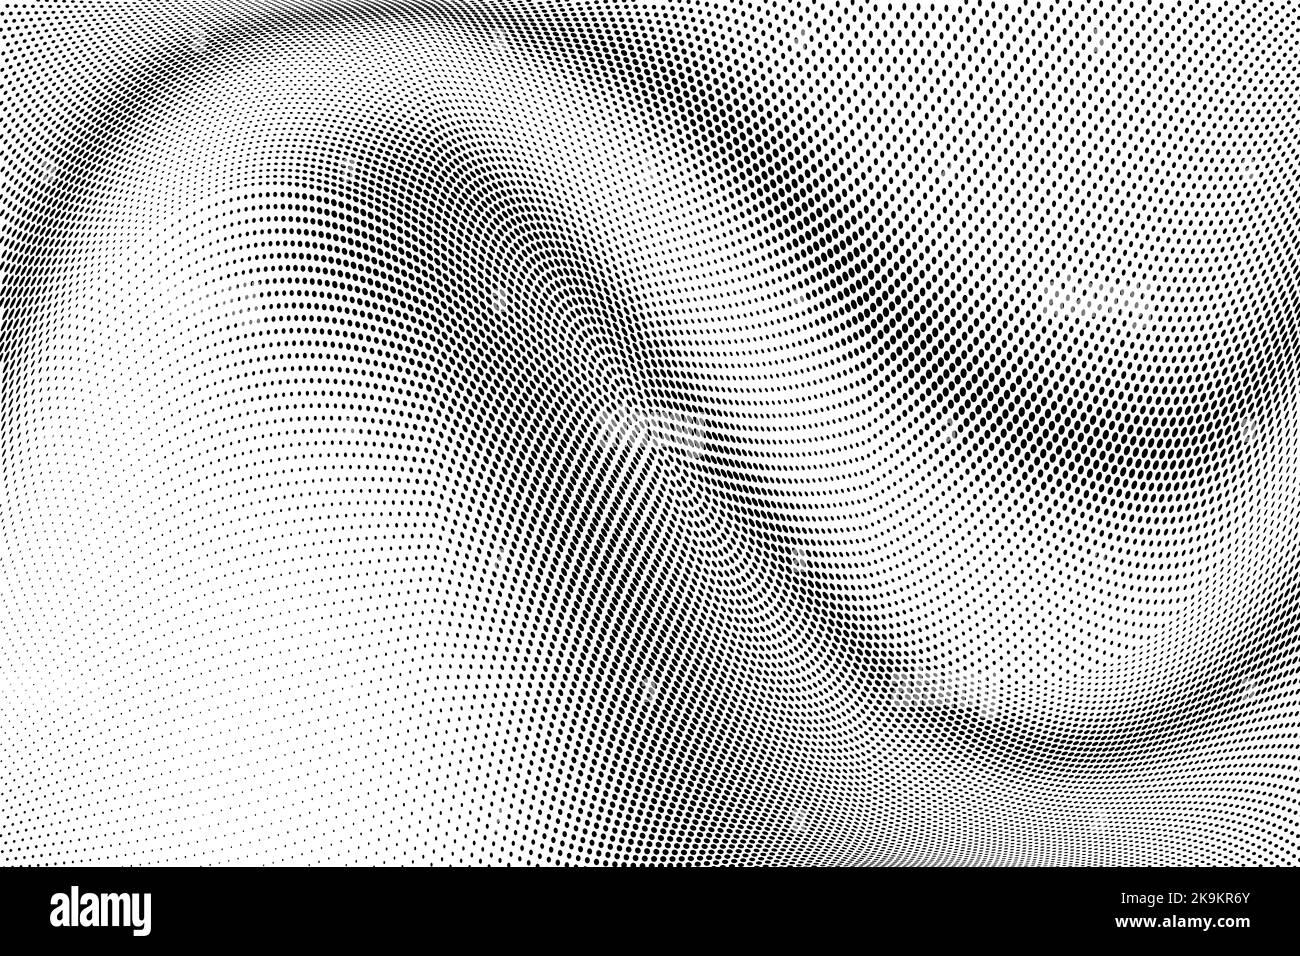 Abstract monochrome grunge wavy halftone pattern. Soft dynamic lines. Half tone  vector illustration Stock Photo